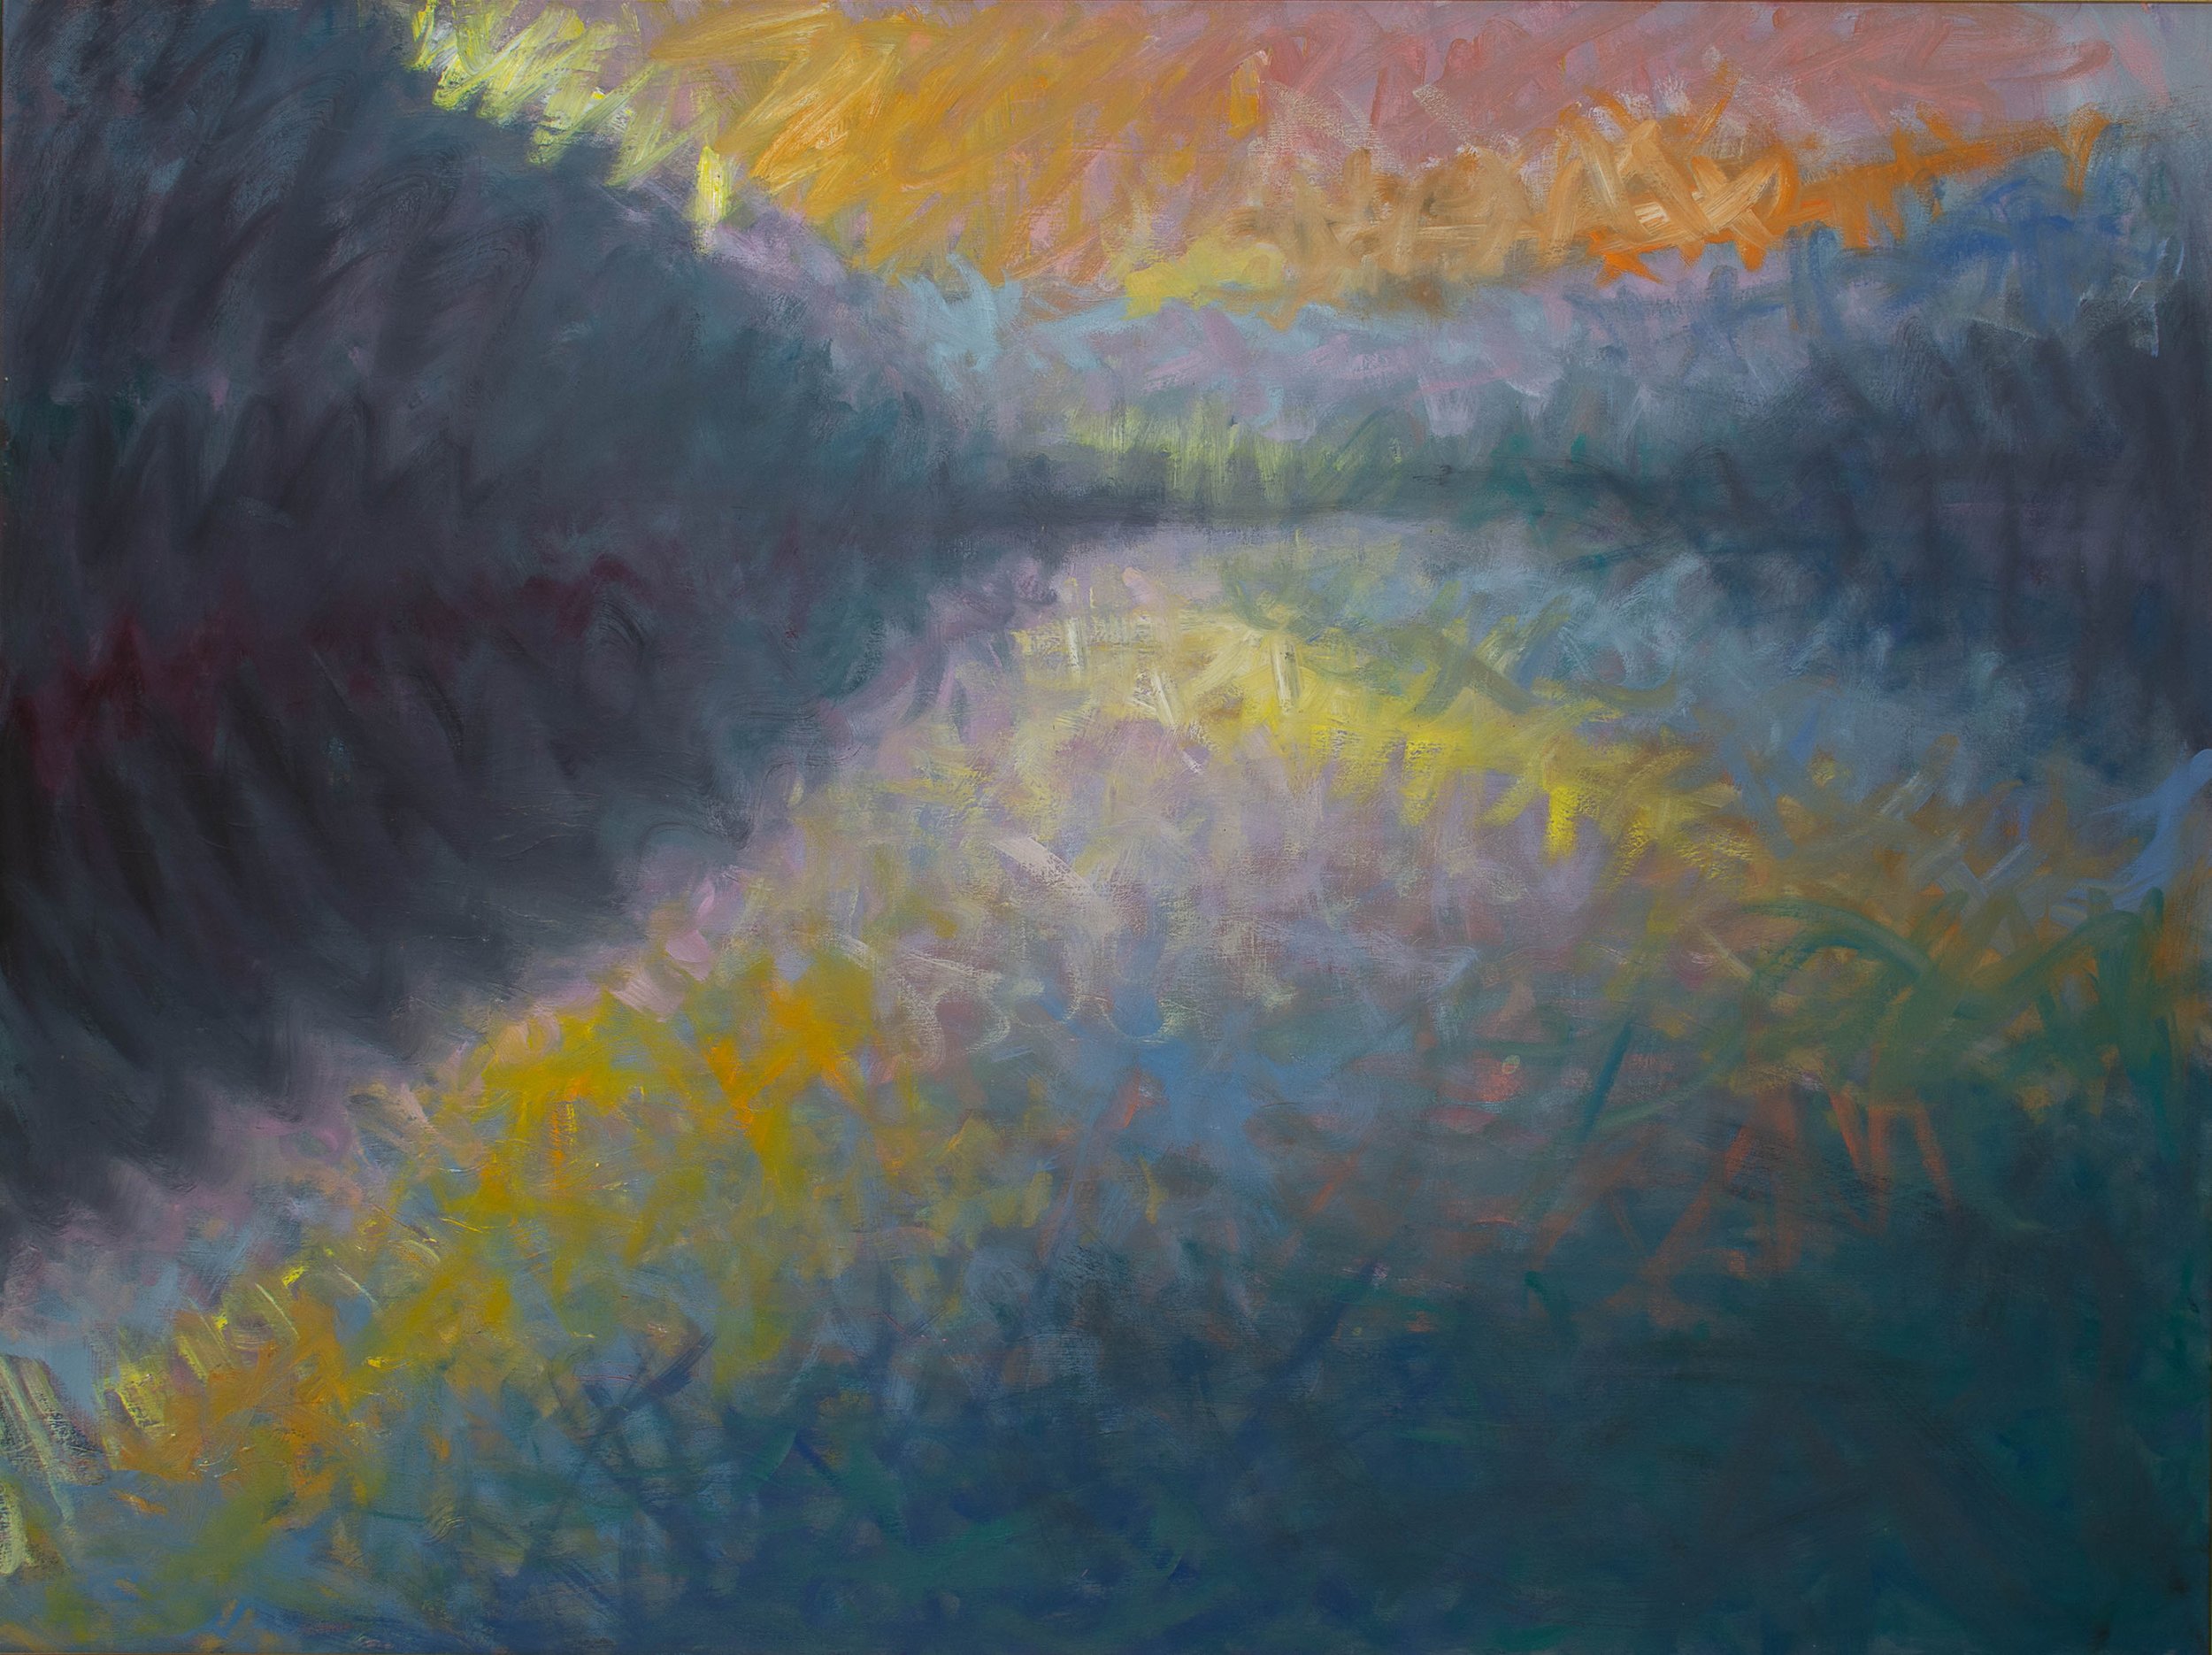    "River Dawn Mist (Lumberville Bridge View)"  1993 30” x 40” Oil on Canvas $9,000  